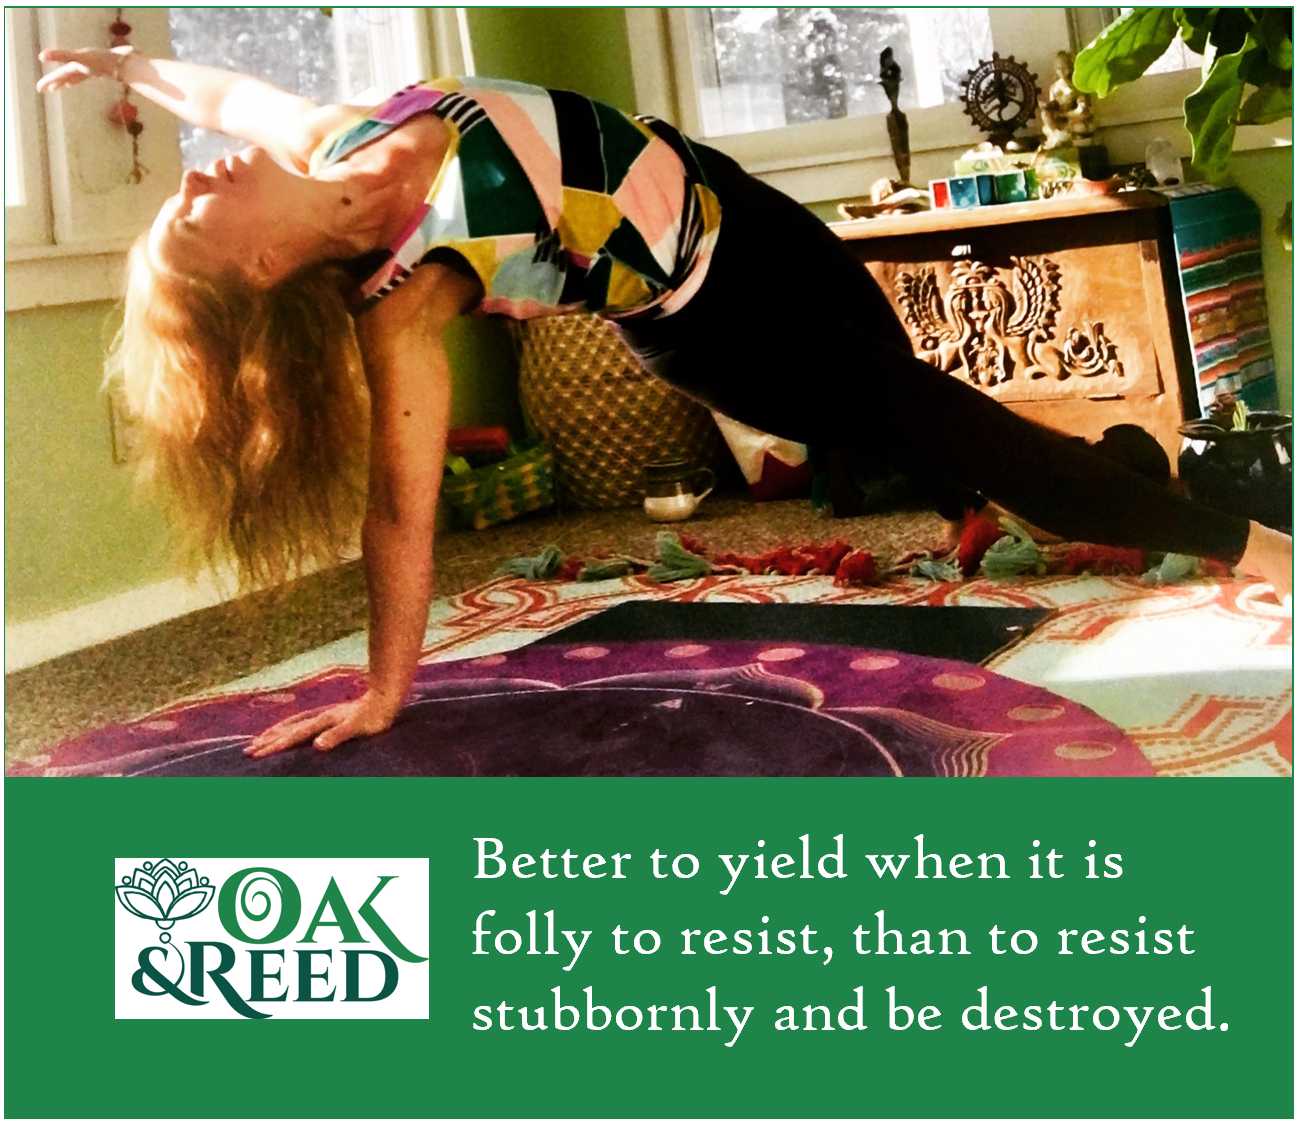 oak and reed yoga